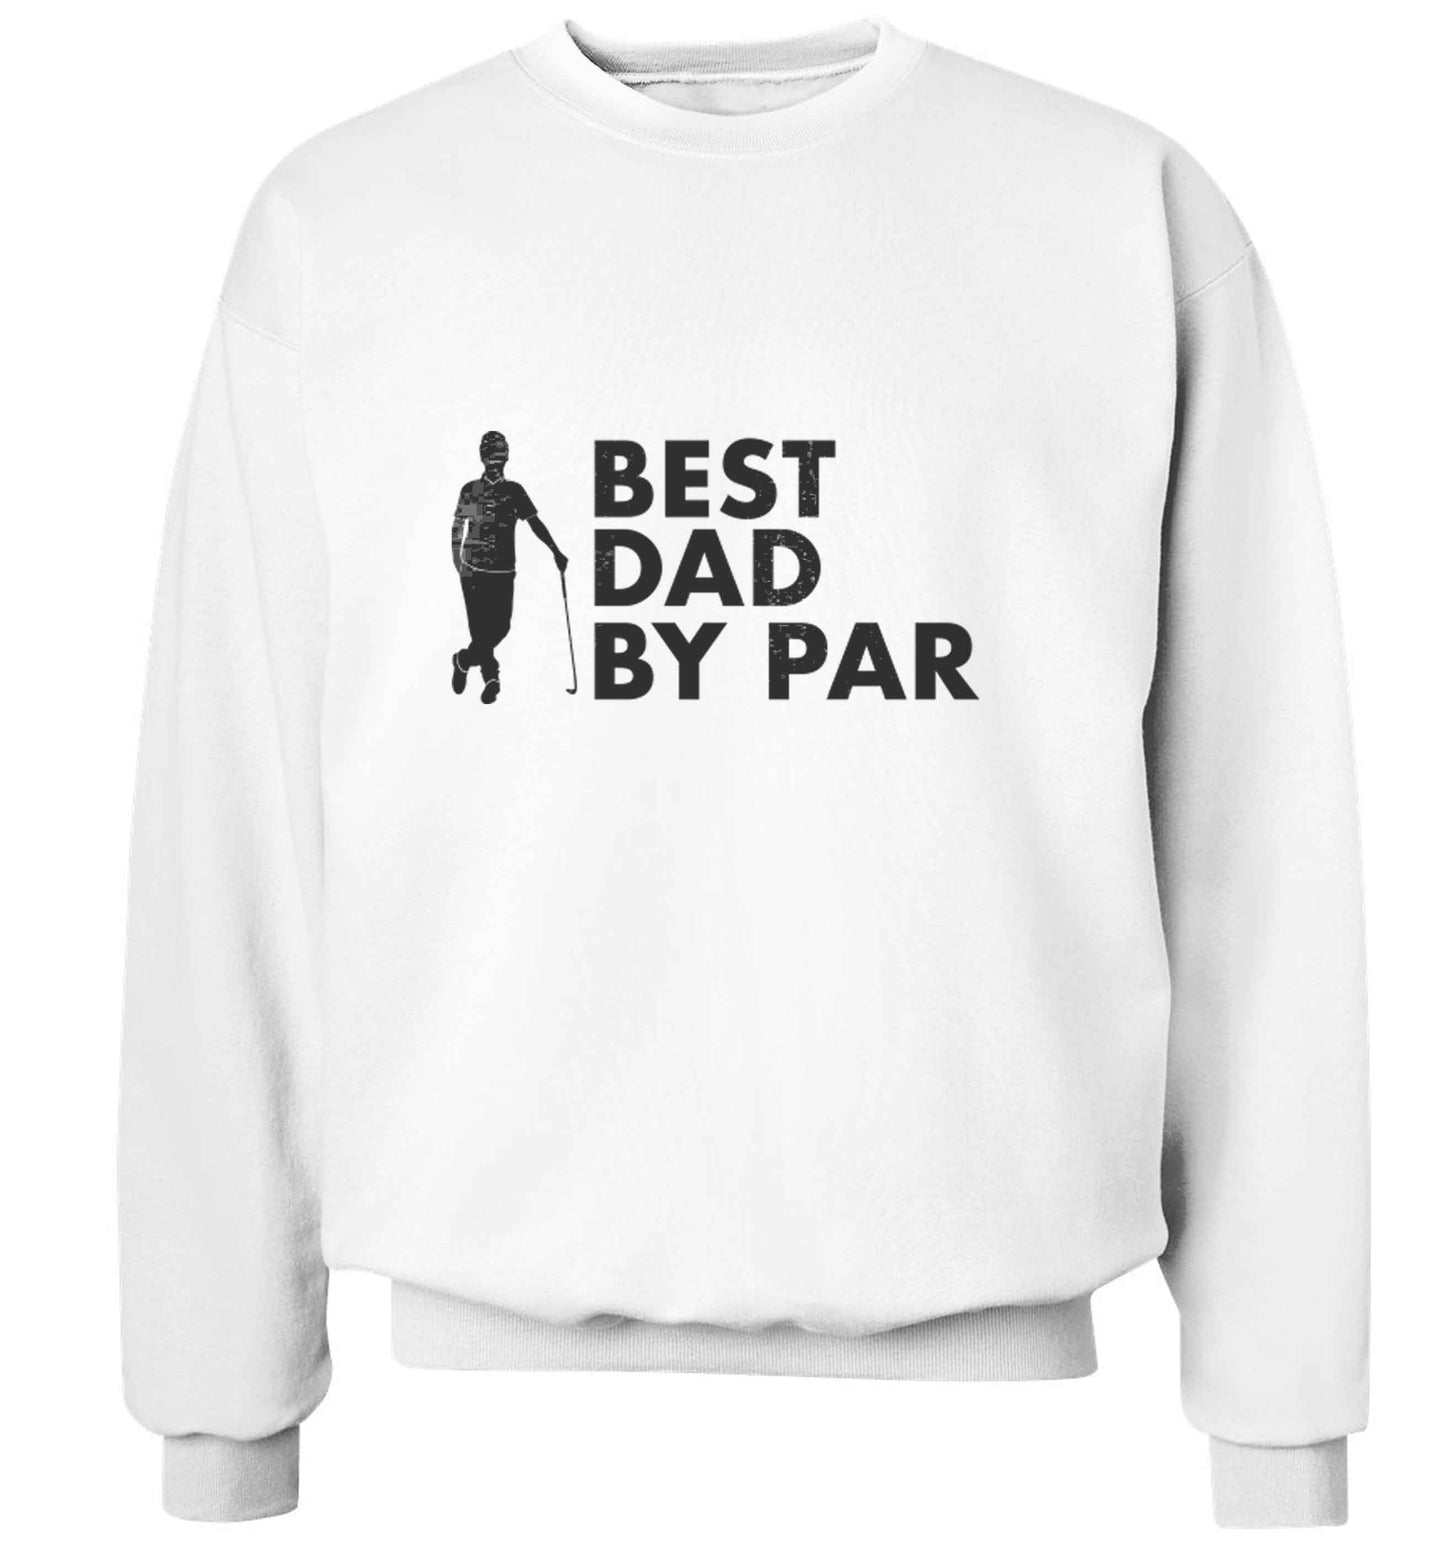 Best dad by par adult's unisex white sweater 2XL